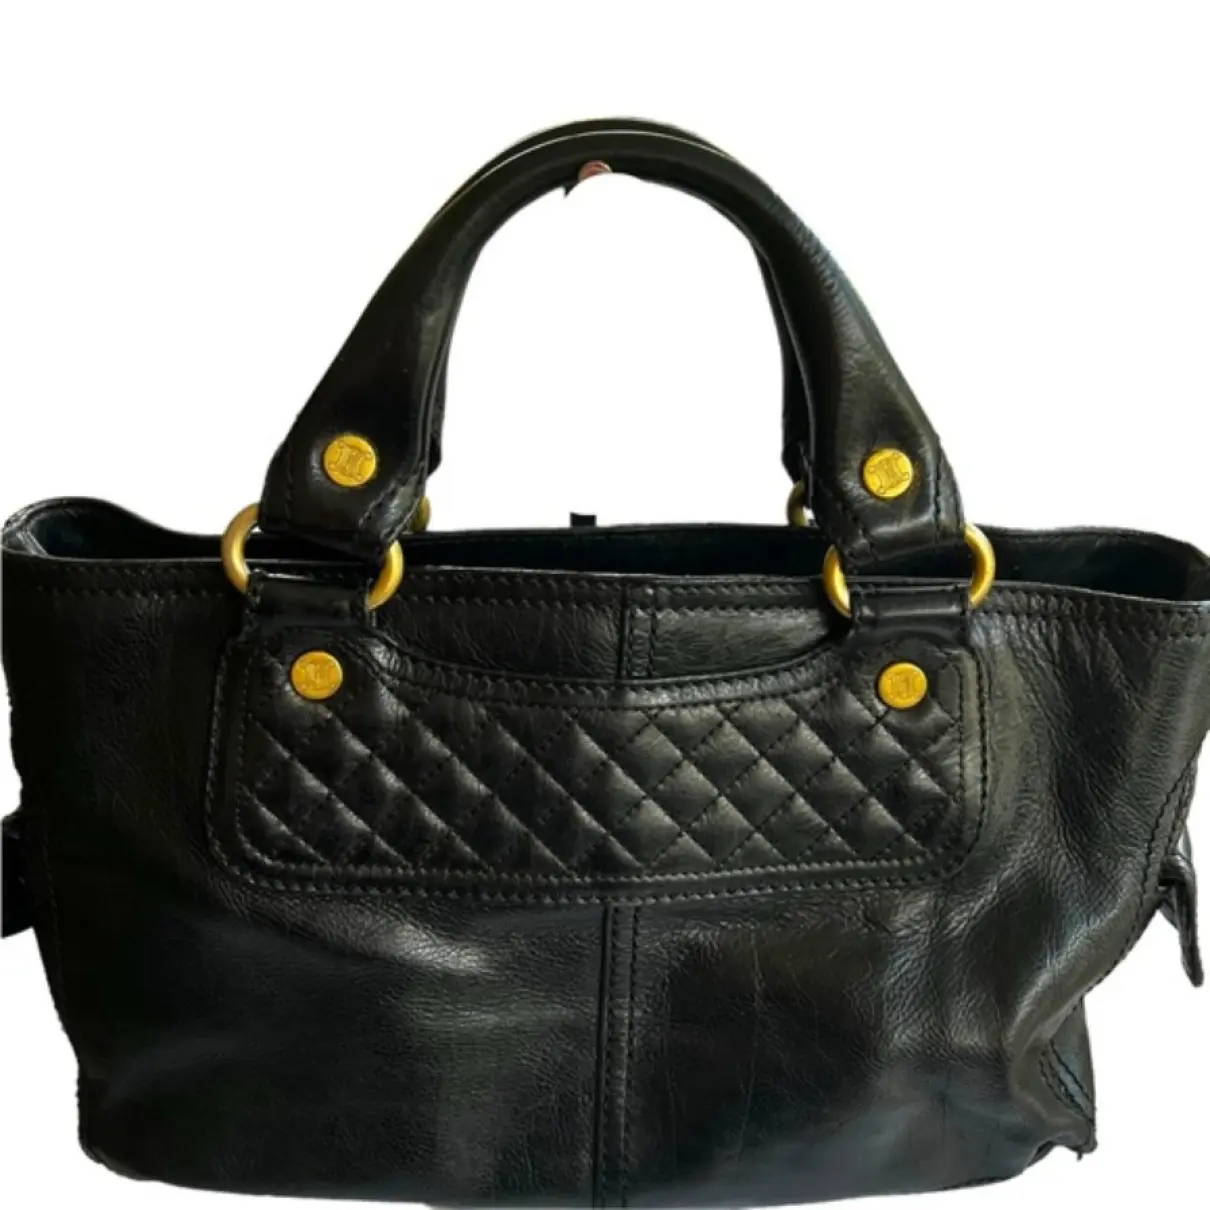 Buy Celine Boogie leather satchel online - Vintage